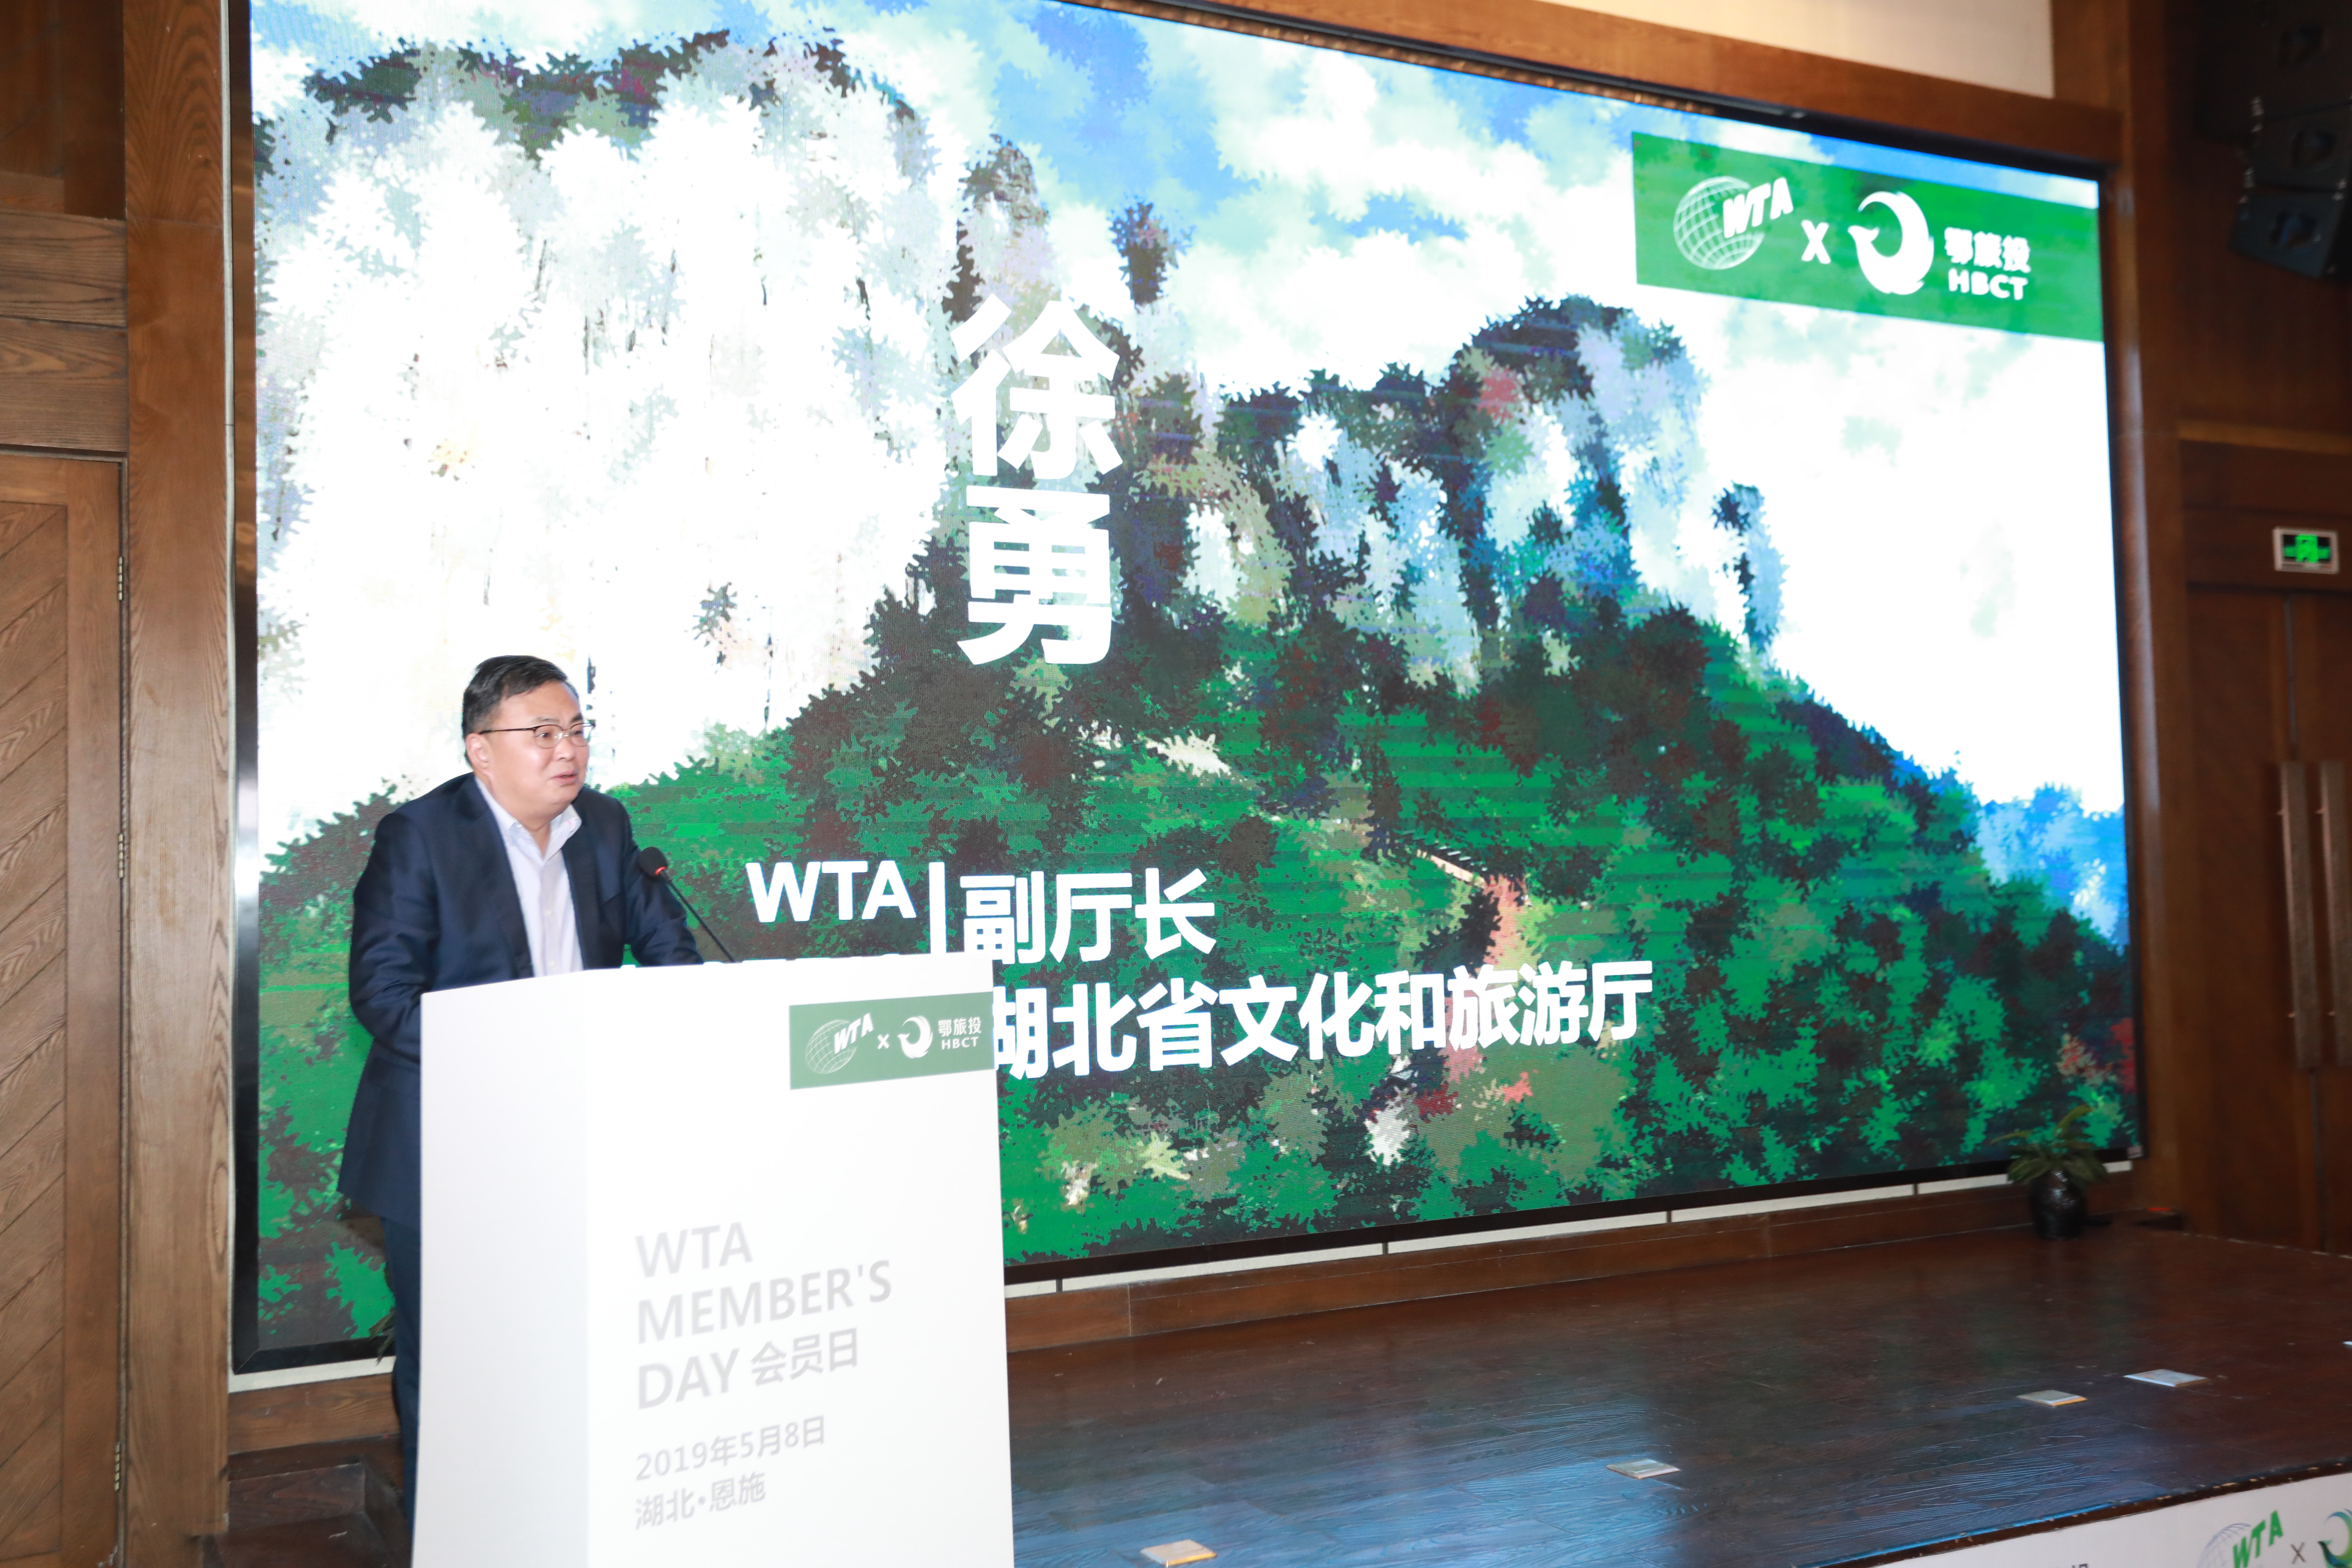 Xu Yong, Deputy Director of Hubei Provincial Department of Culture and Tourism